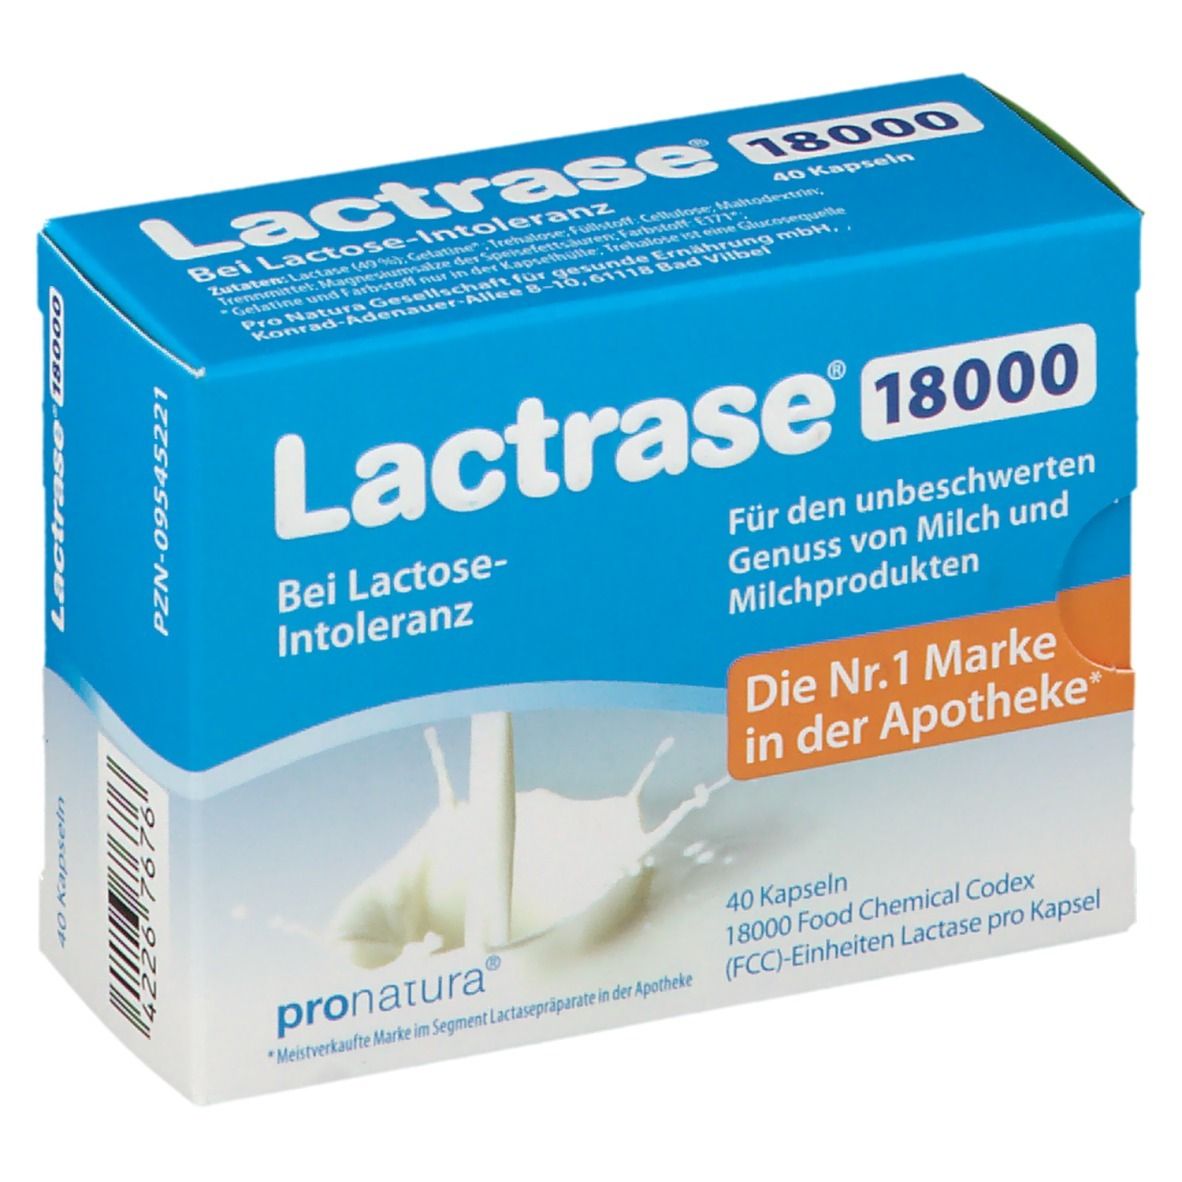 Image of Lactrase® 18000 FCC Kapseln